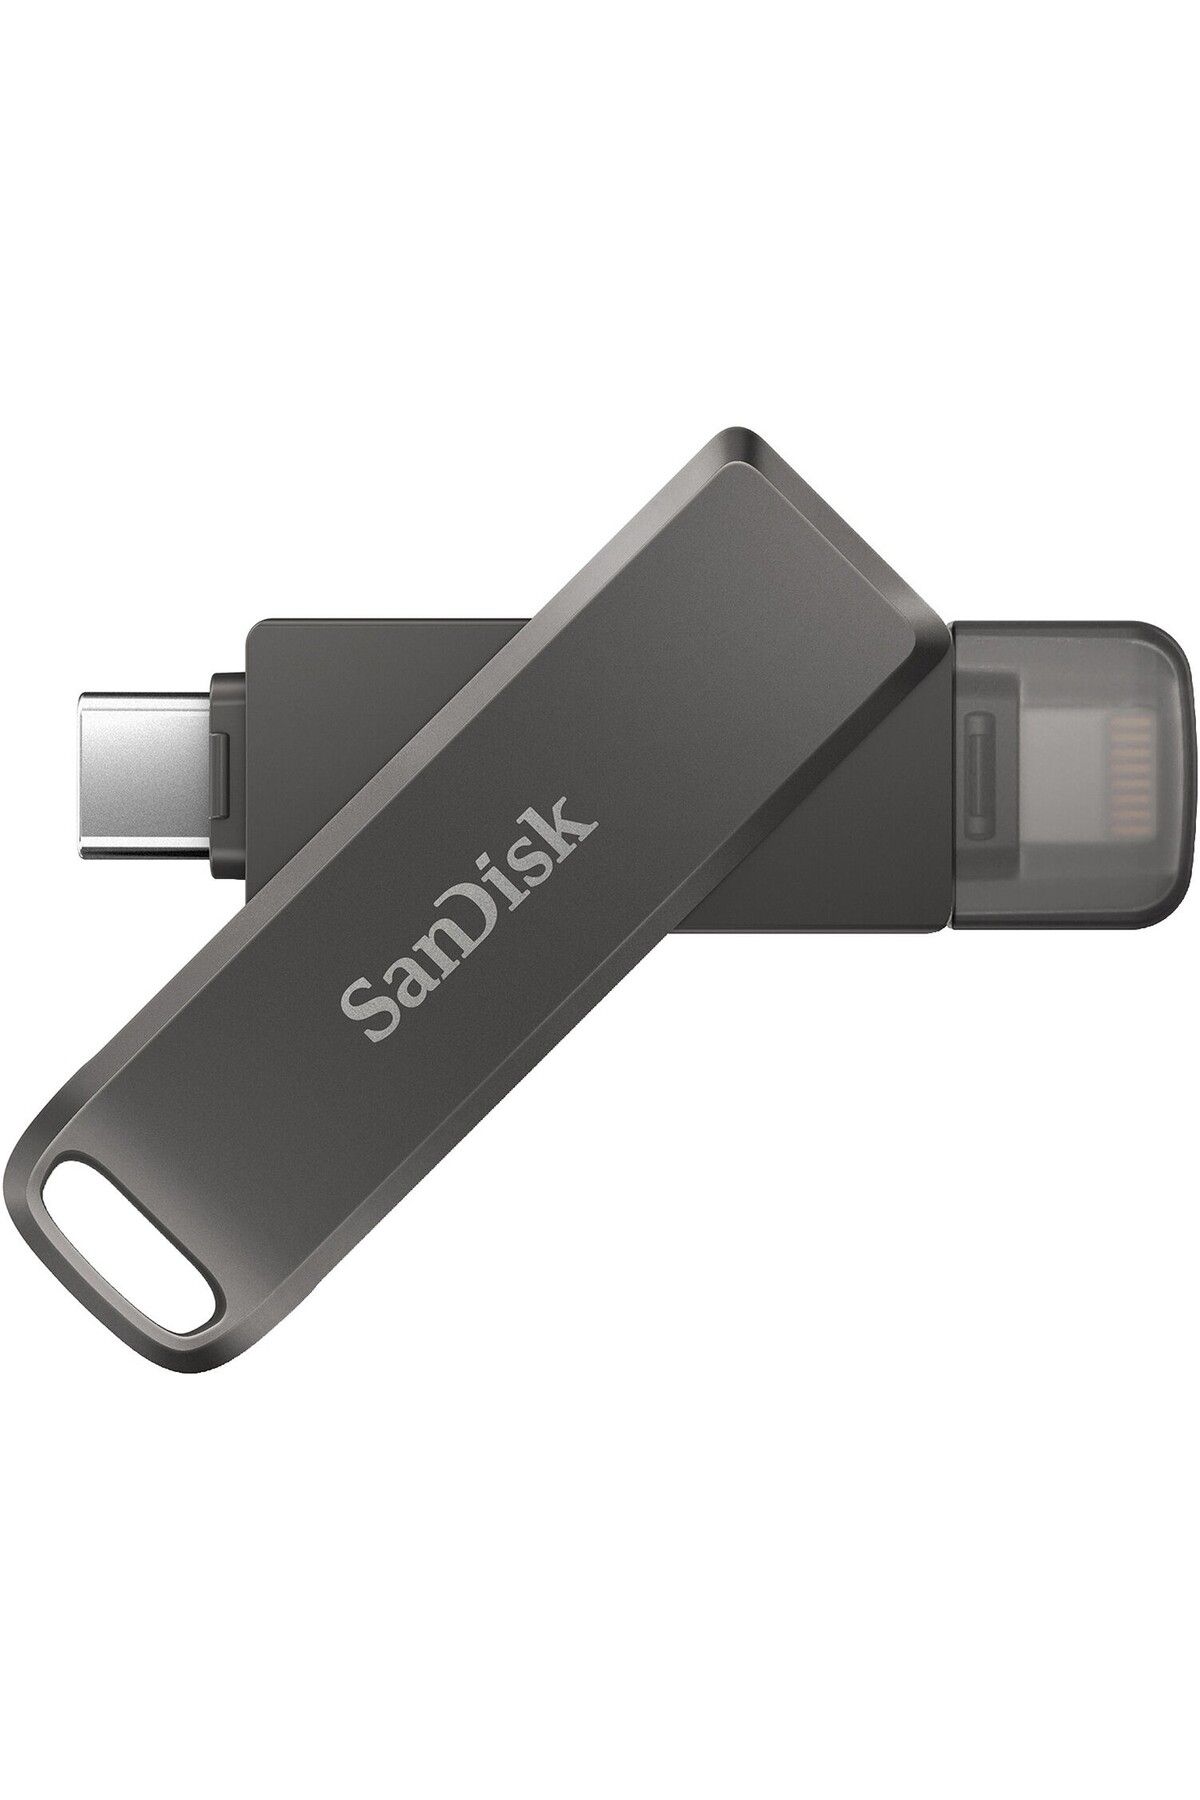 sommeow Sandisk 128gb Ixpand Luxe Iphone Usb Flash Bellek Sdıx70n-128g-gn6ne